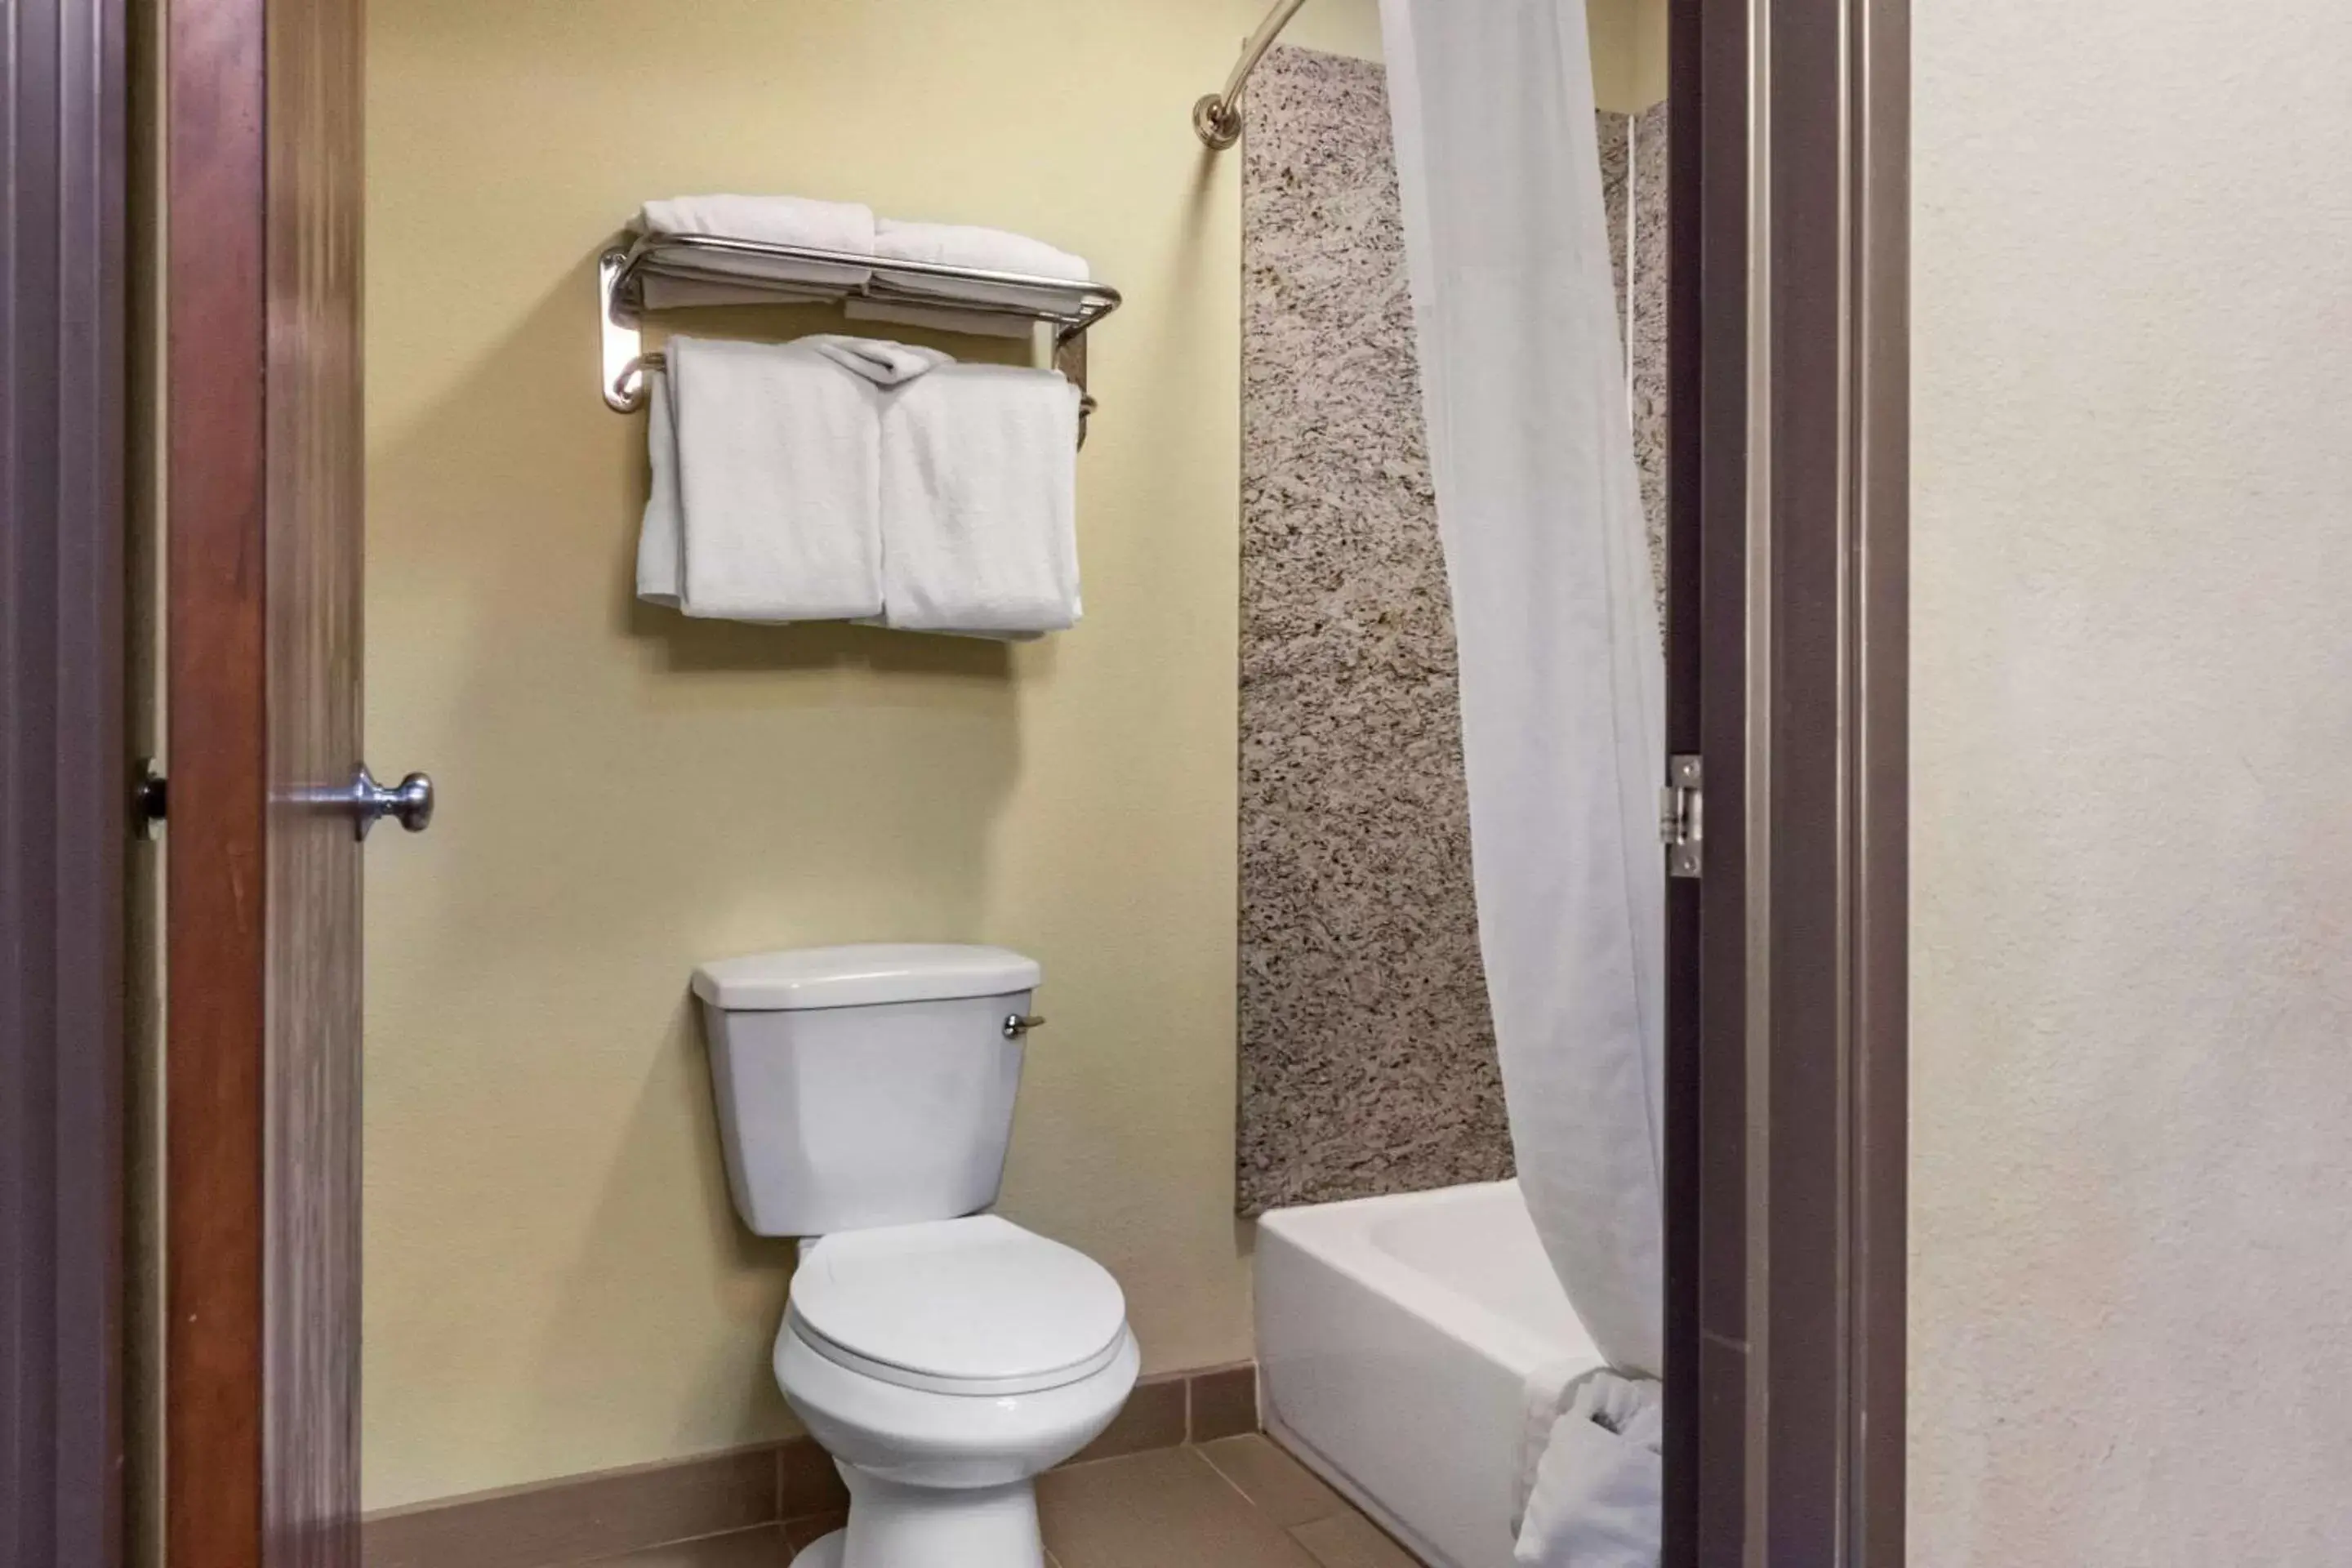 Photo of the whole room, Bathroom in Comfort Inn Albuquerque Airport